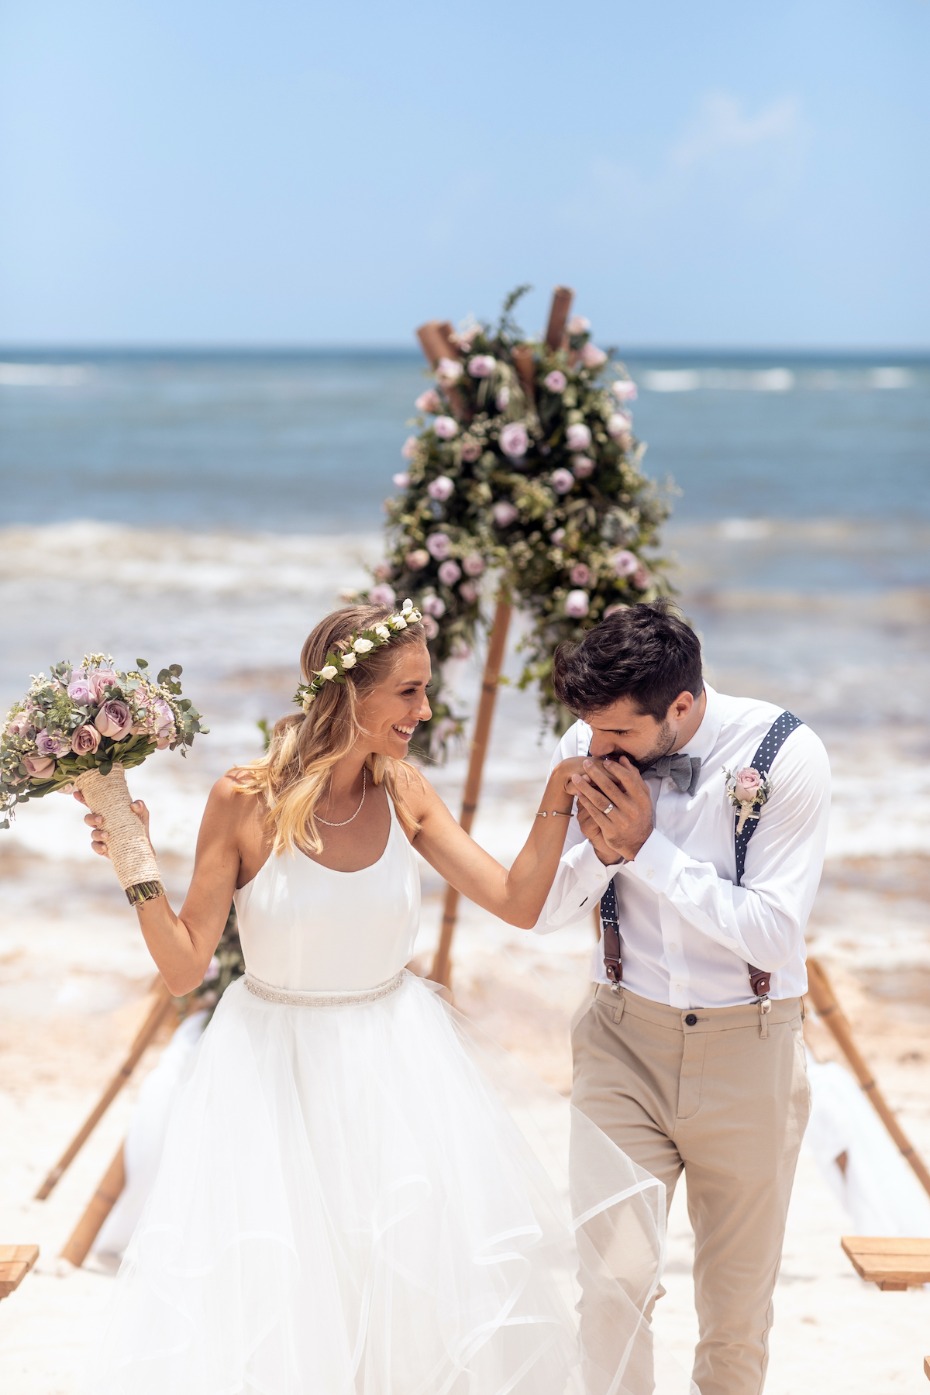 5 Reasons Youâll Want to Have Your Postponed Wedding In Paradise